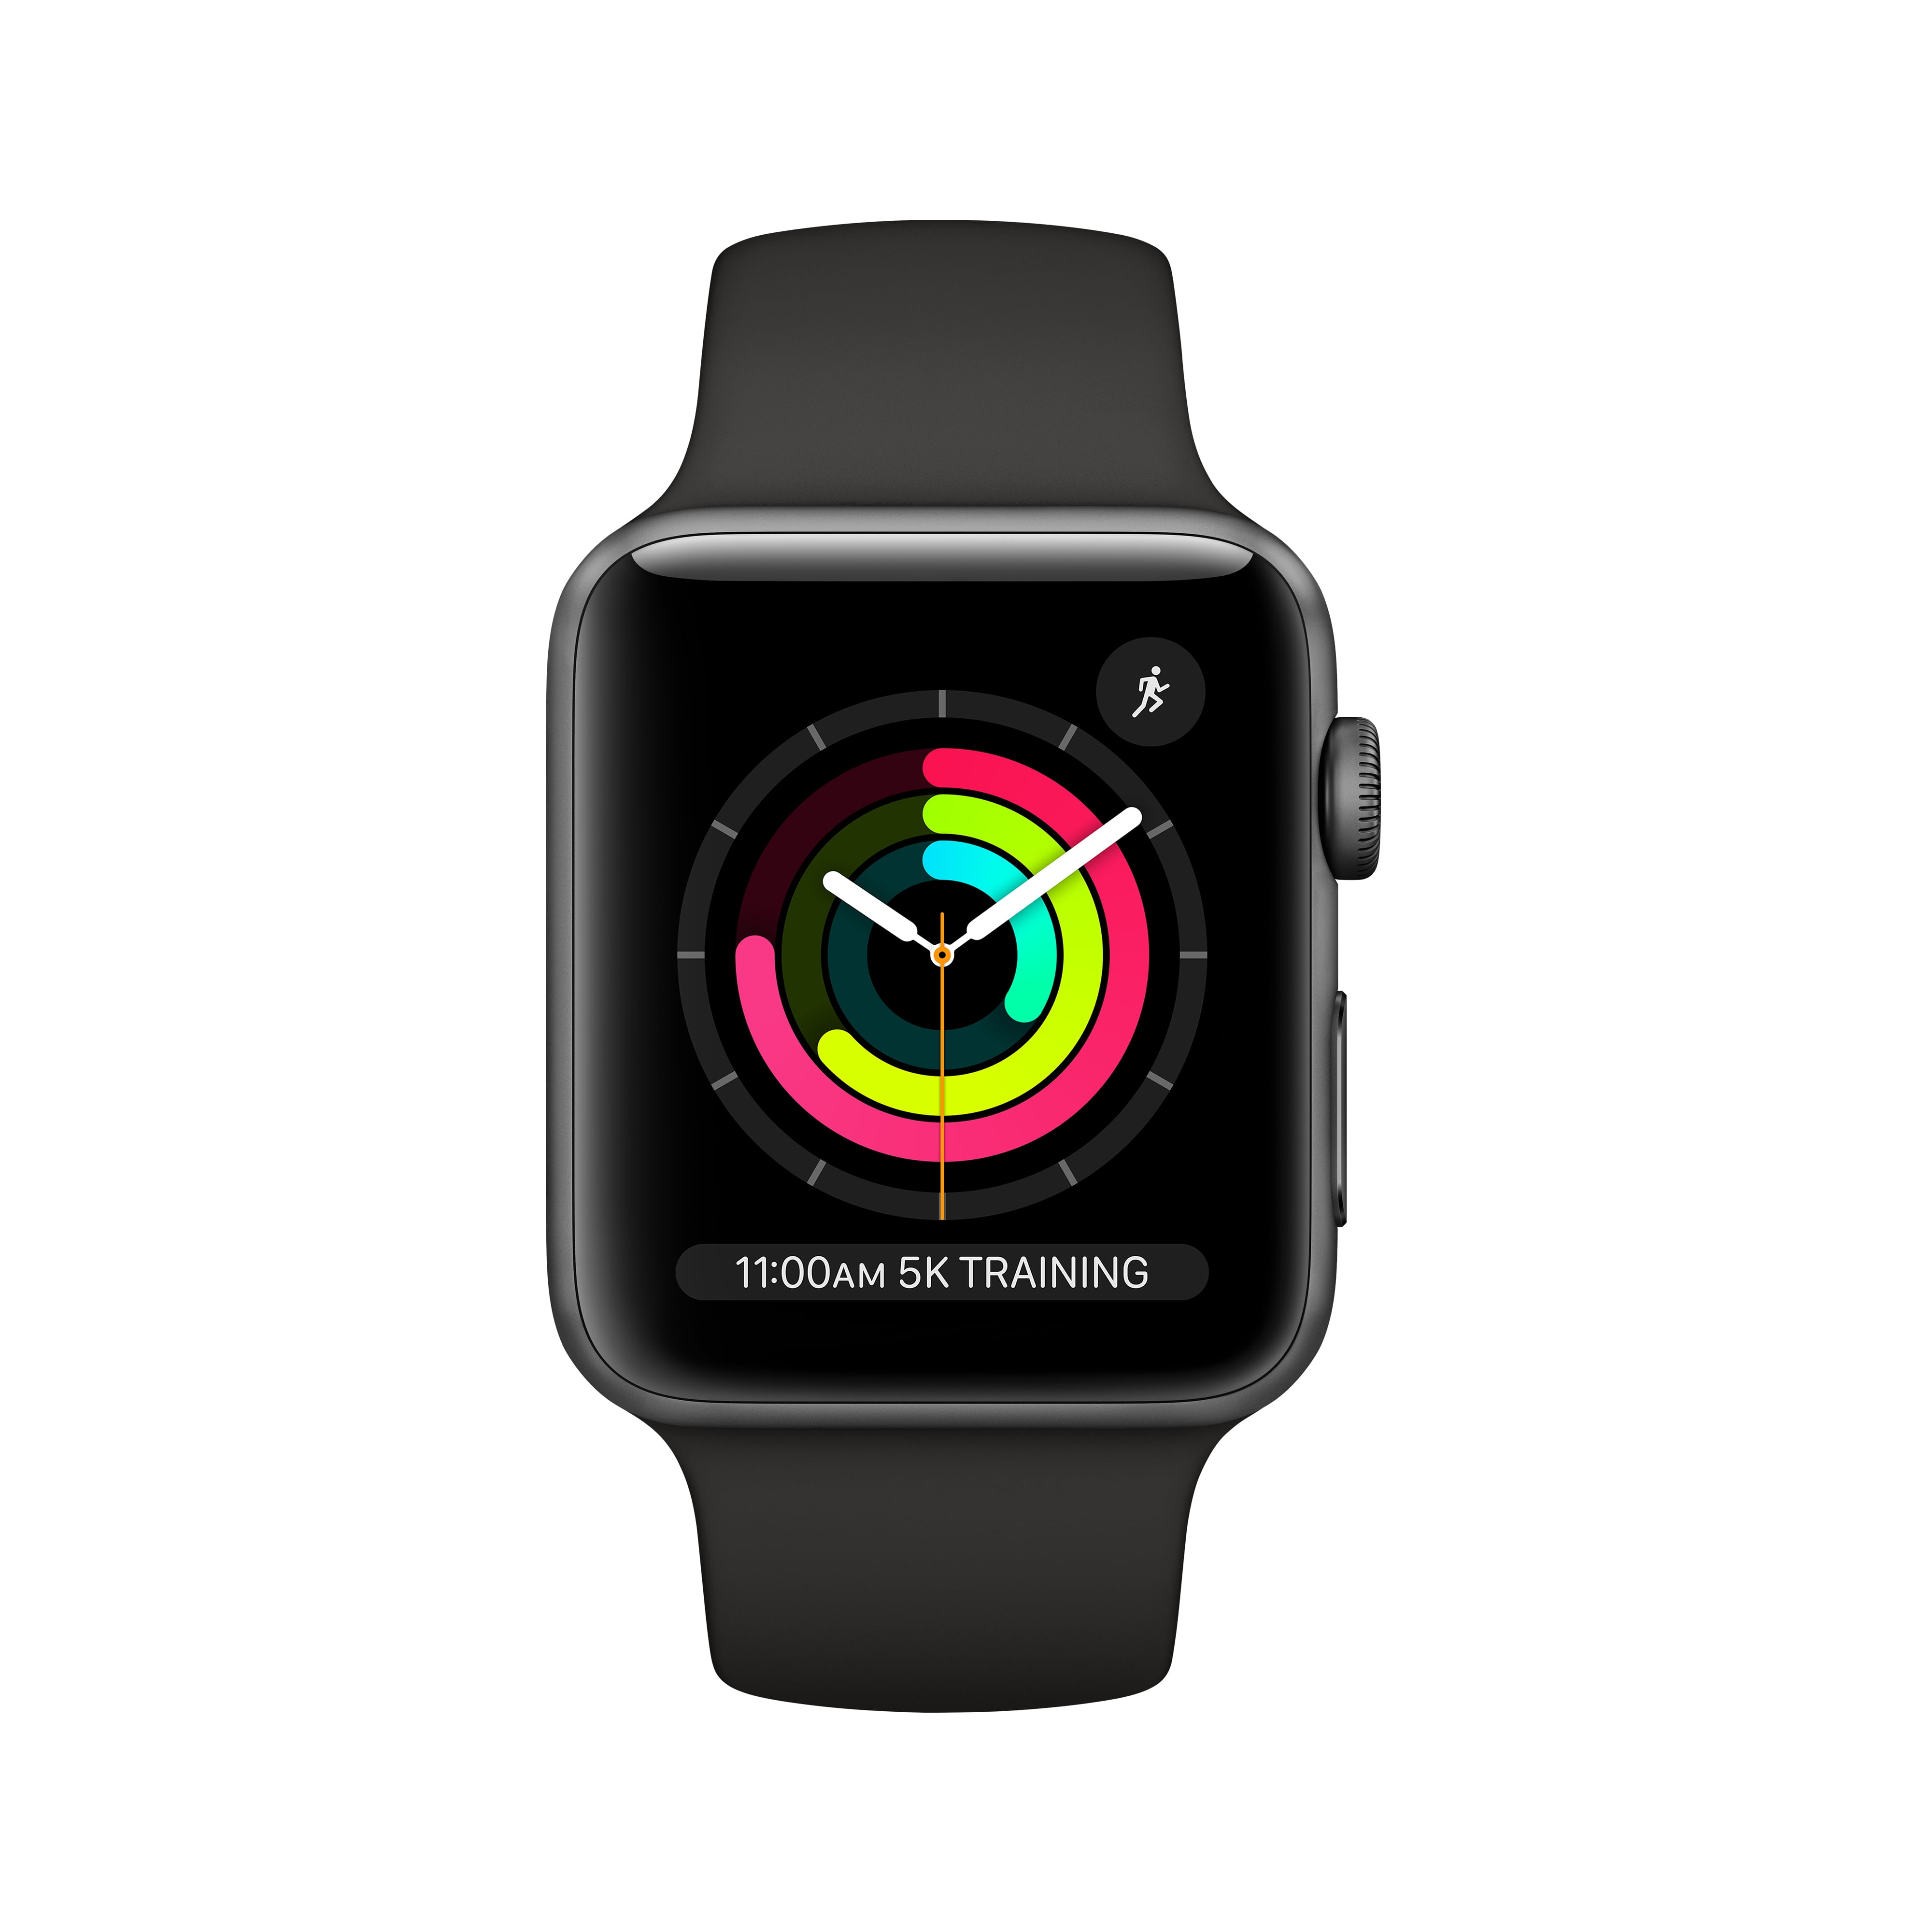 at se Ombord Ydeevne Apple Watch Series 3 GPS Space Gray - 42mm - Black Sport Band - Walmart.com